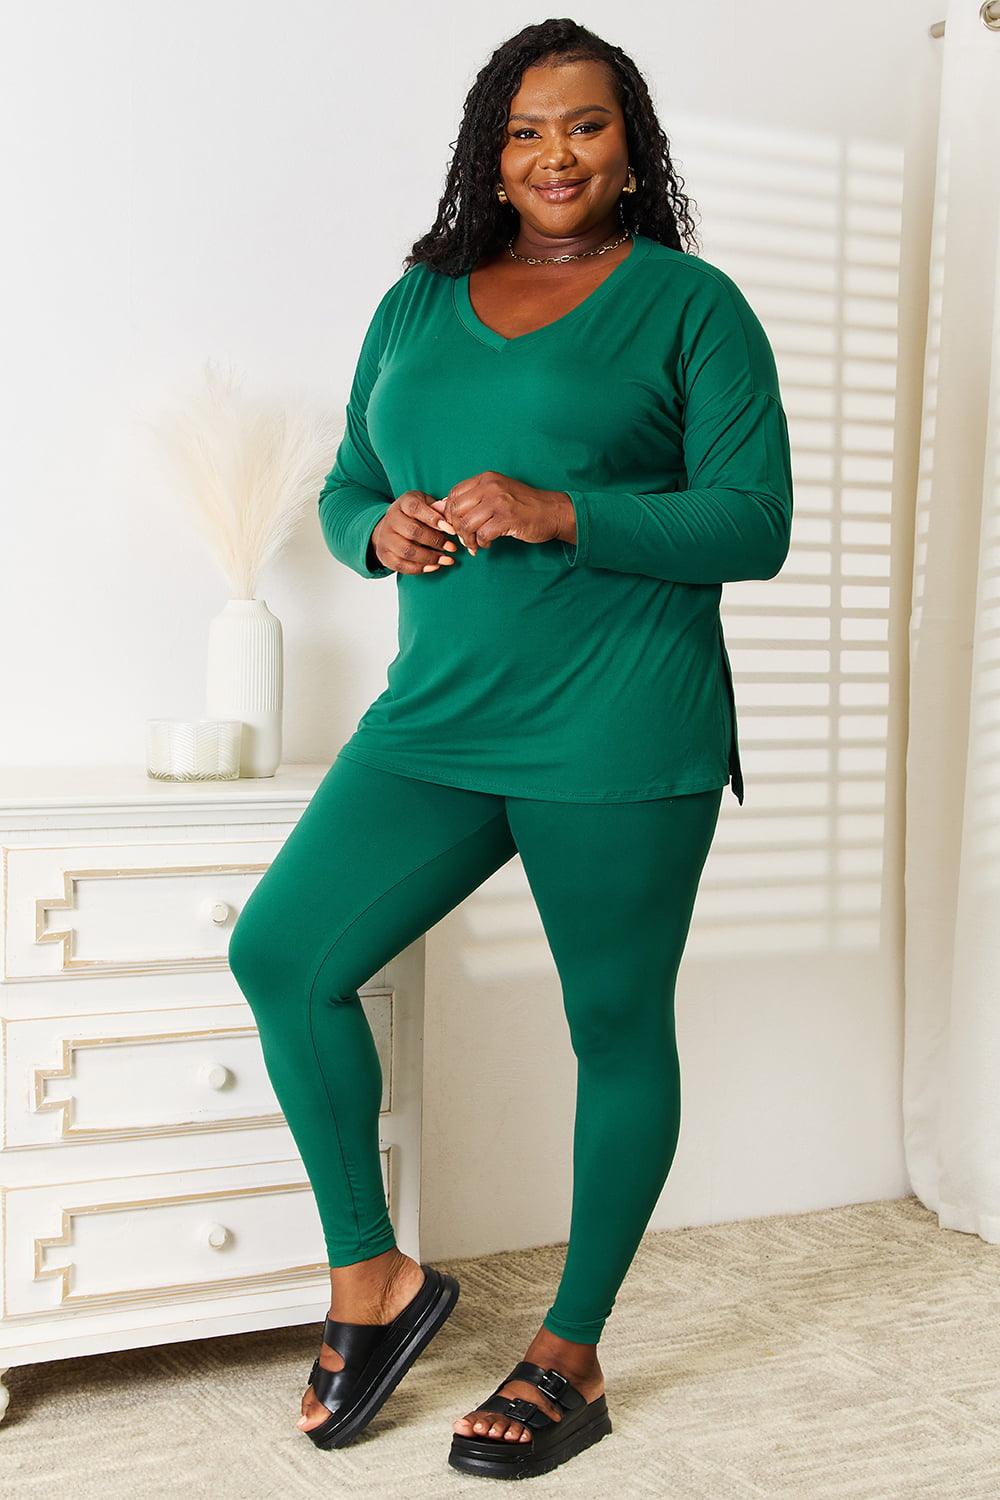 Bona Fide Fashion - Full Size Long Sleeve Top and Leggings Set - Women Fashion - Bona Fide Fashion